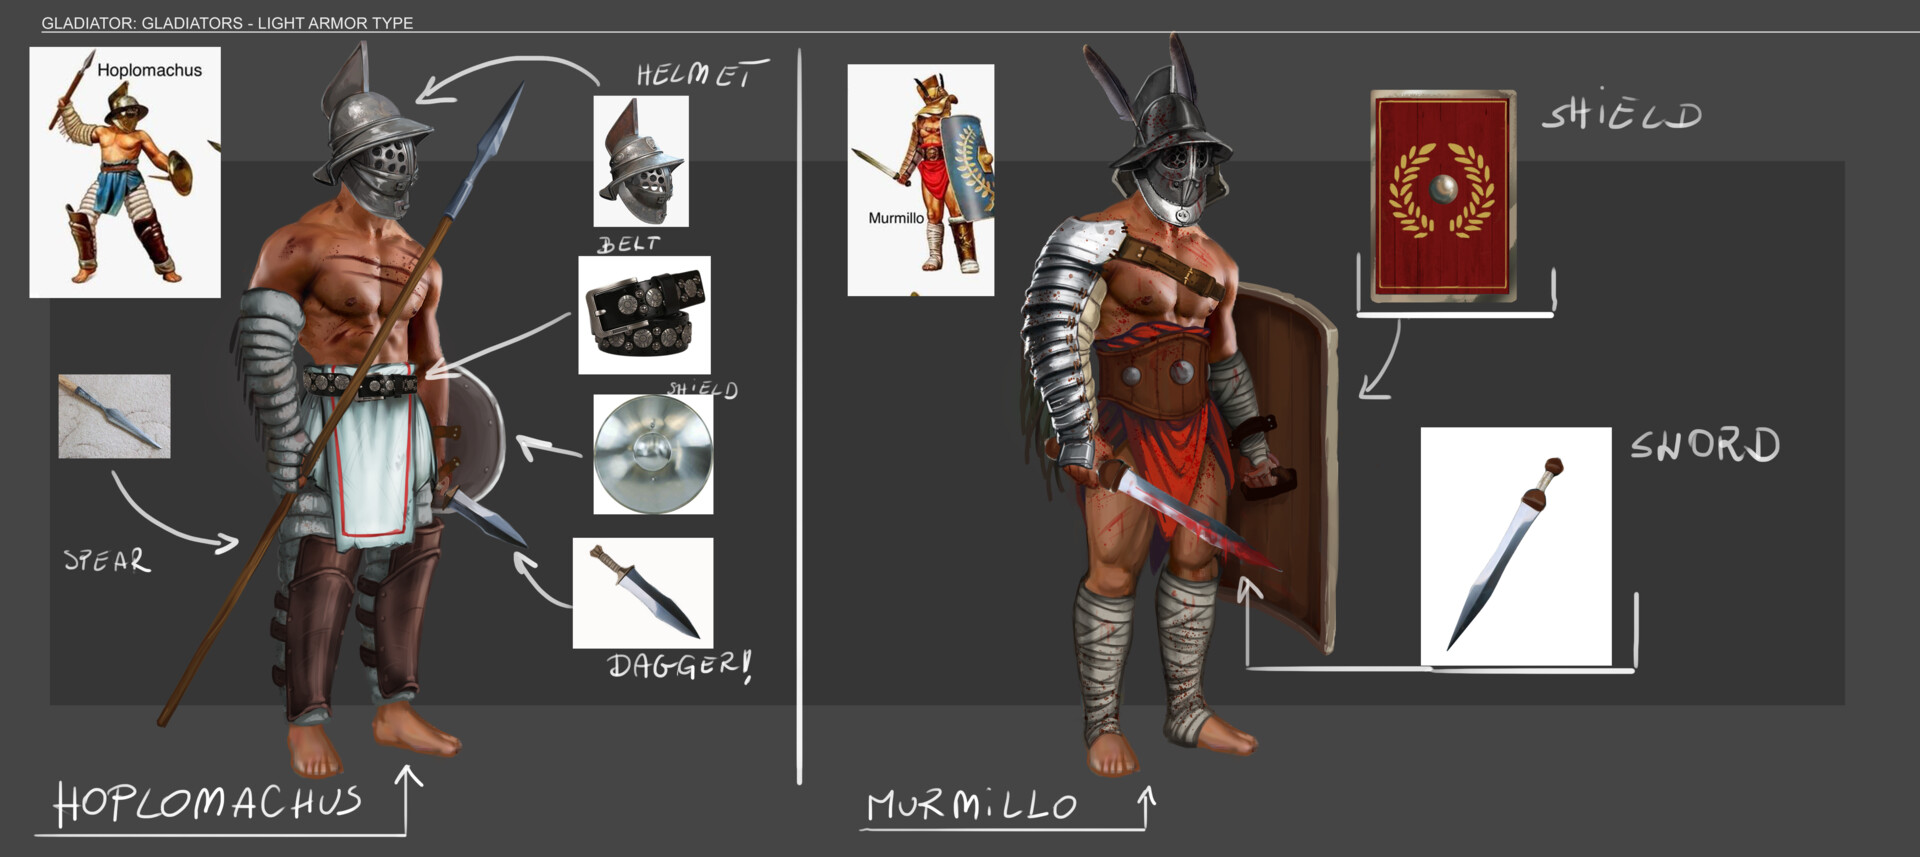 ArtStation - Gladiator: hoplomachus & murmillo type